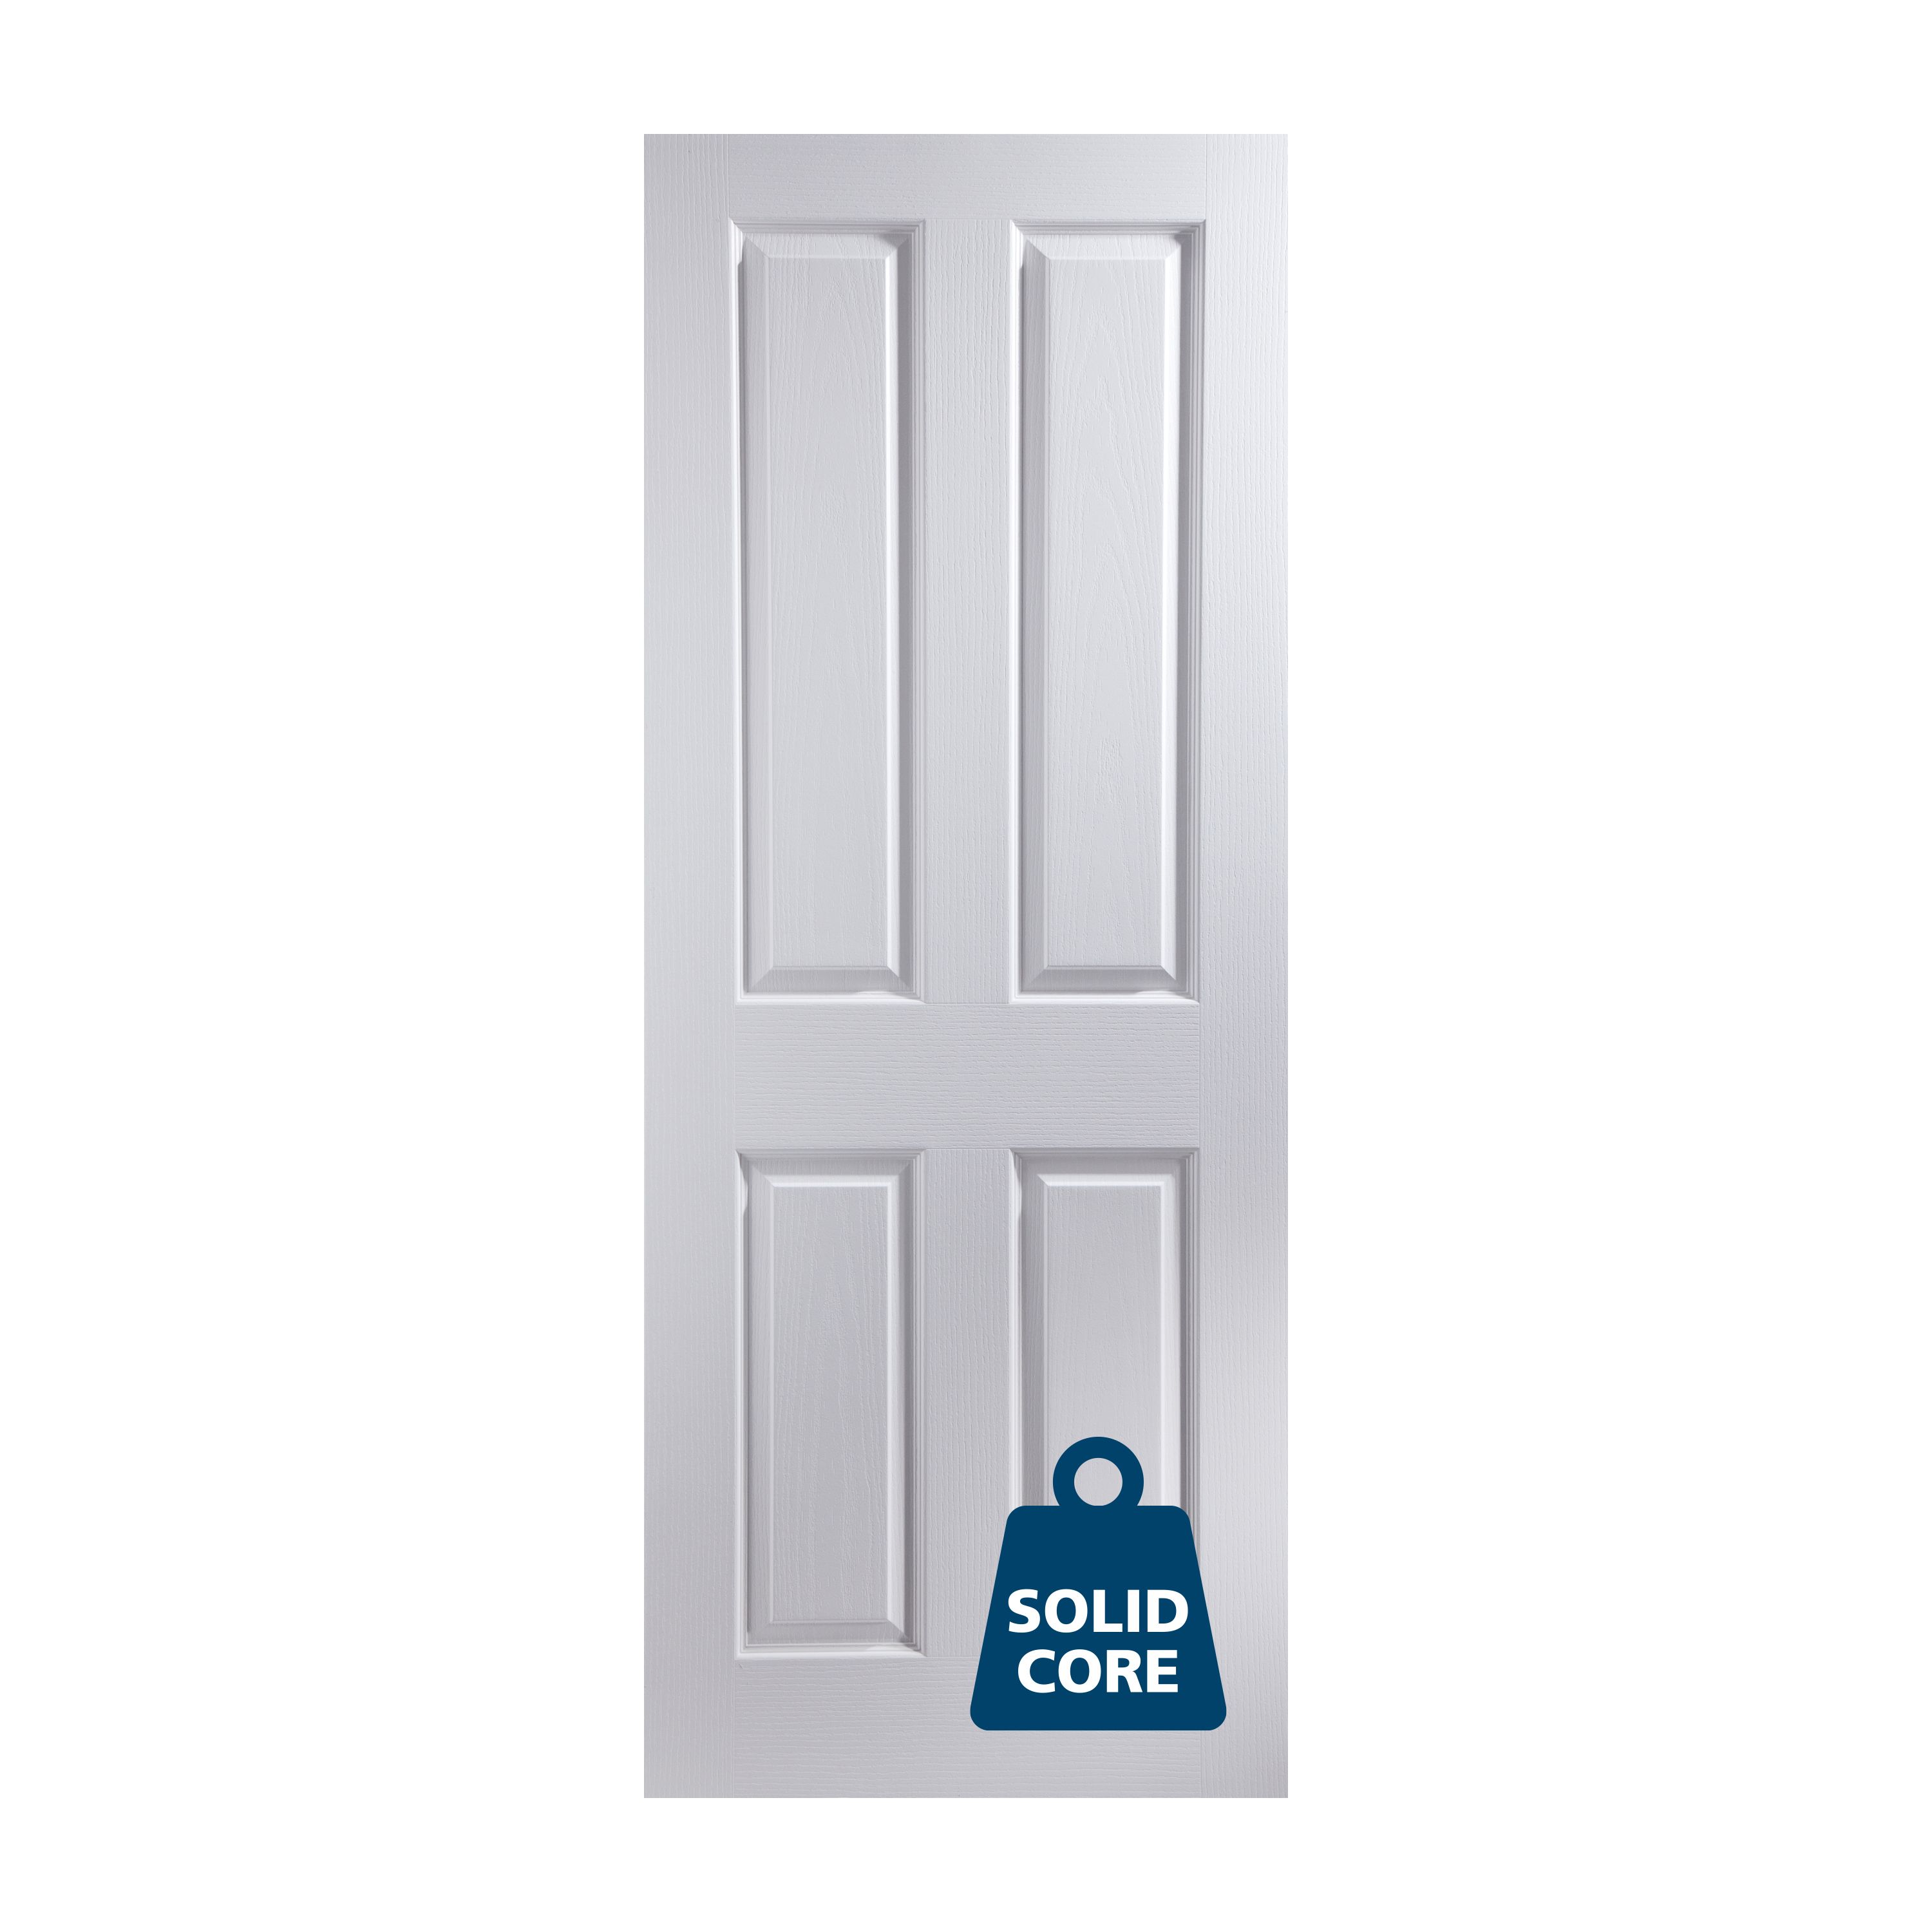 Jeld-Wen 4 panel Solid core Unglazed Contemporary White Internal Door, (H)1981mm (W)762mm (T)35mm